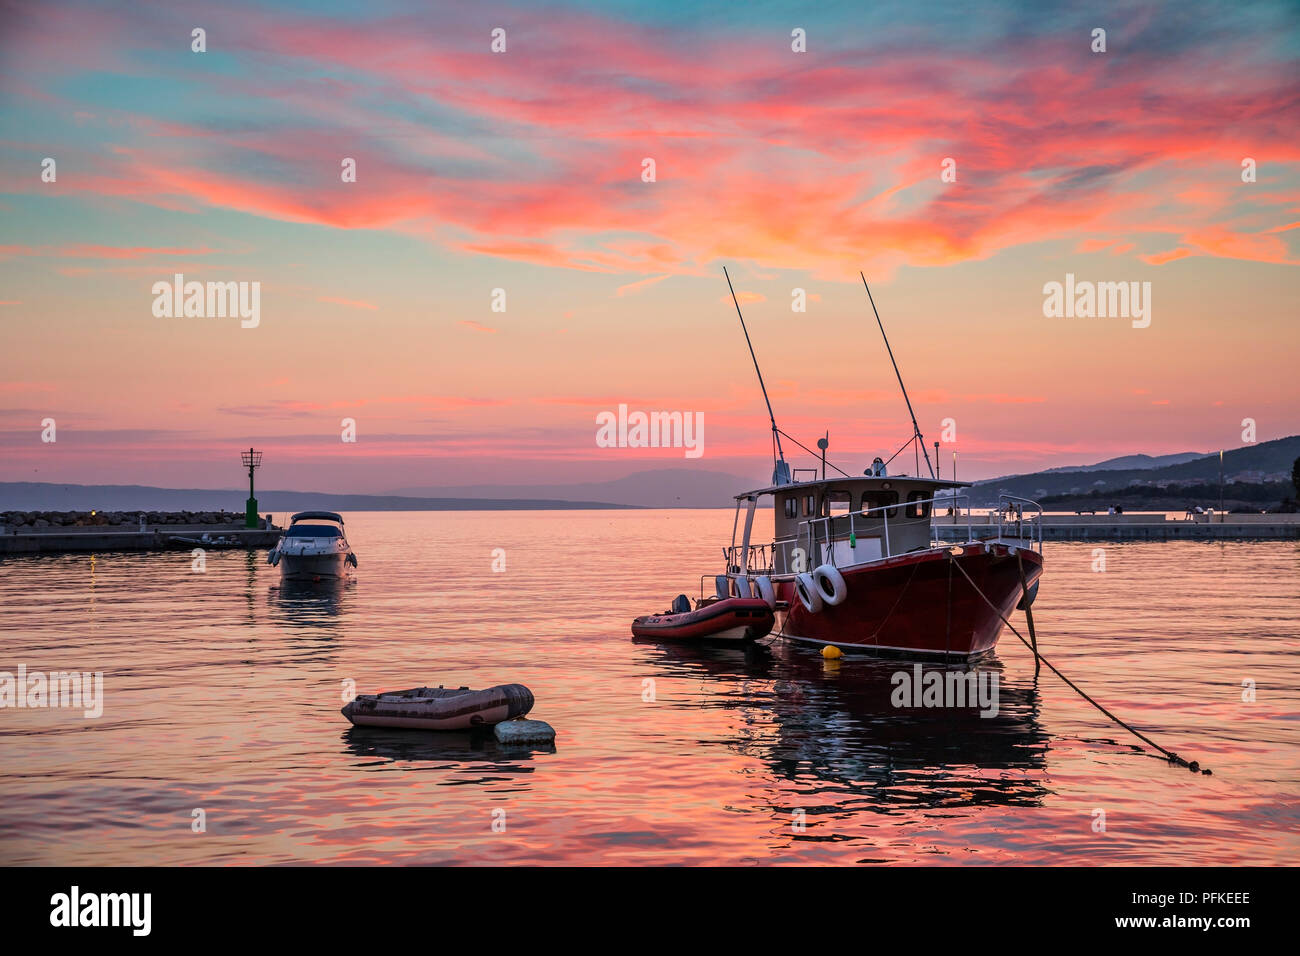 Fishing boat at pinky sunset Stock Photo